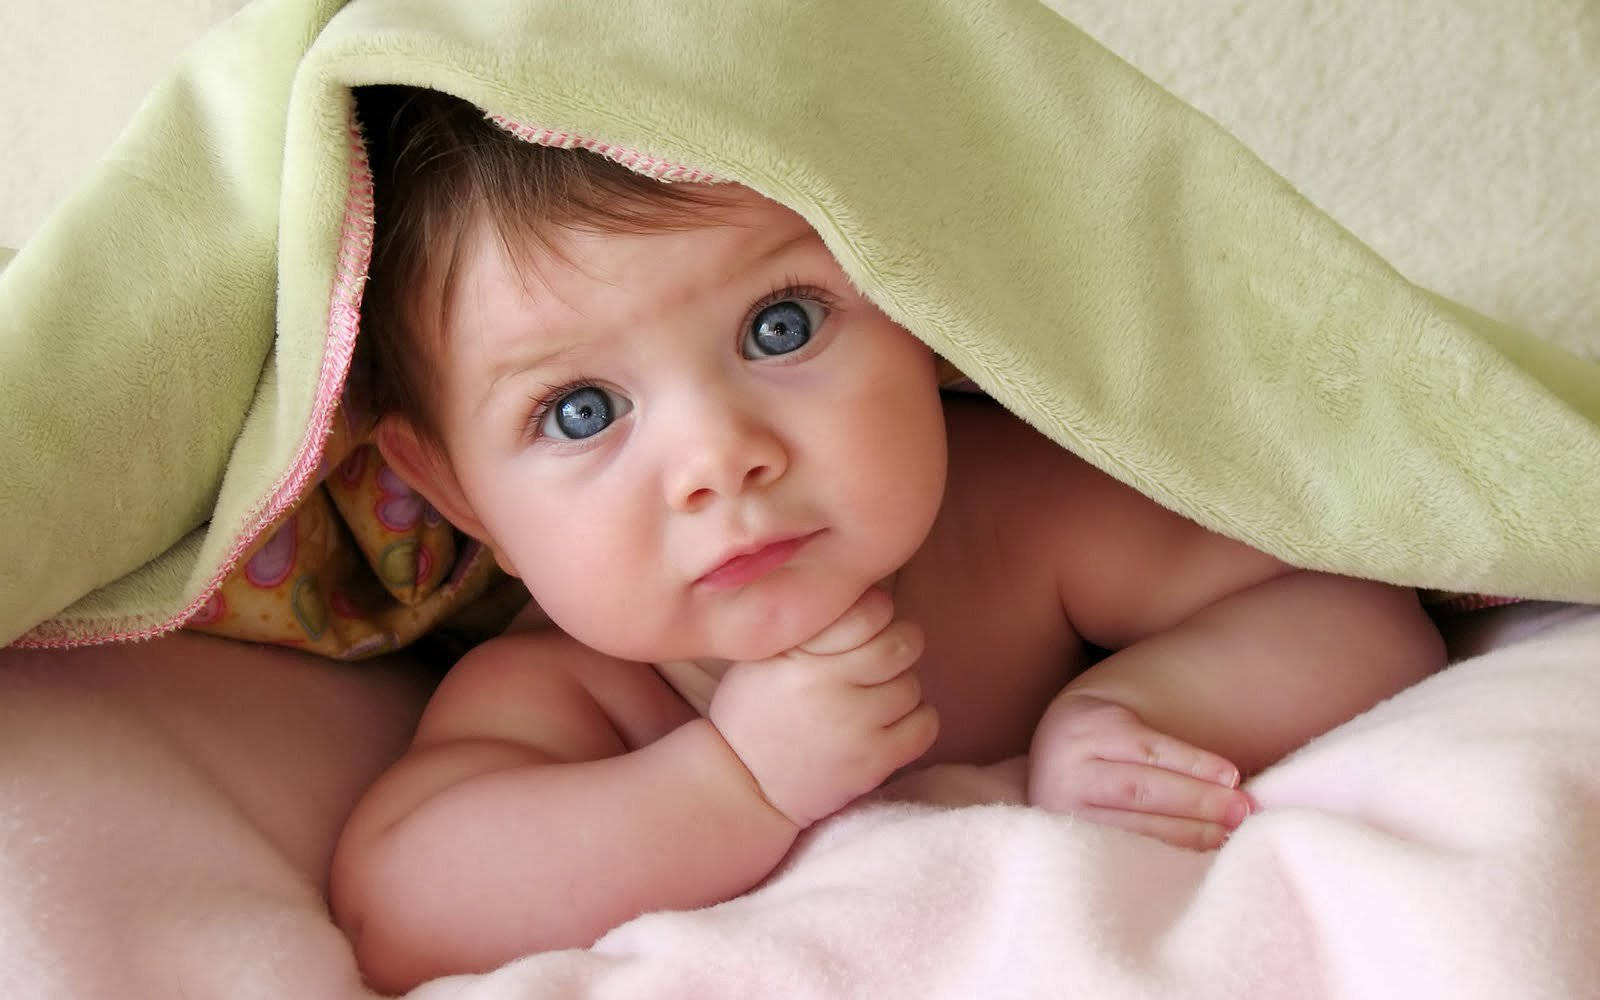 Baby Fotografering 1600 X 1000 Wallpaper